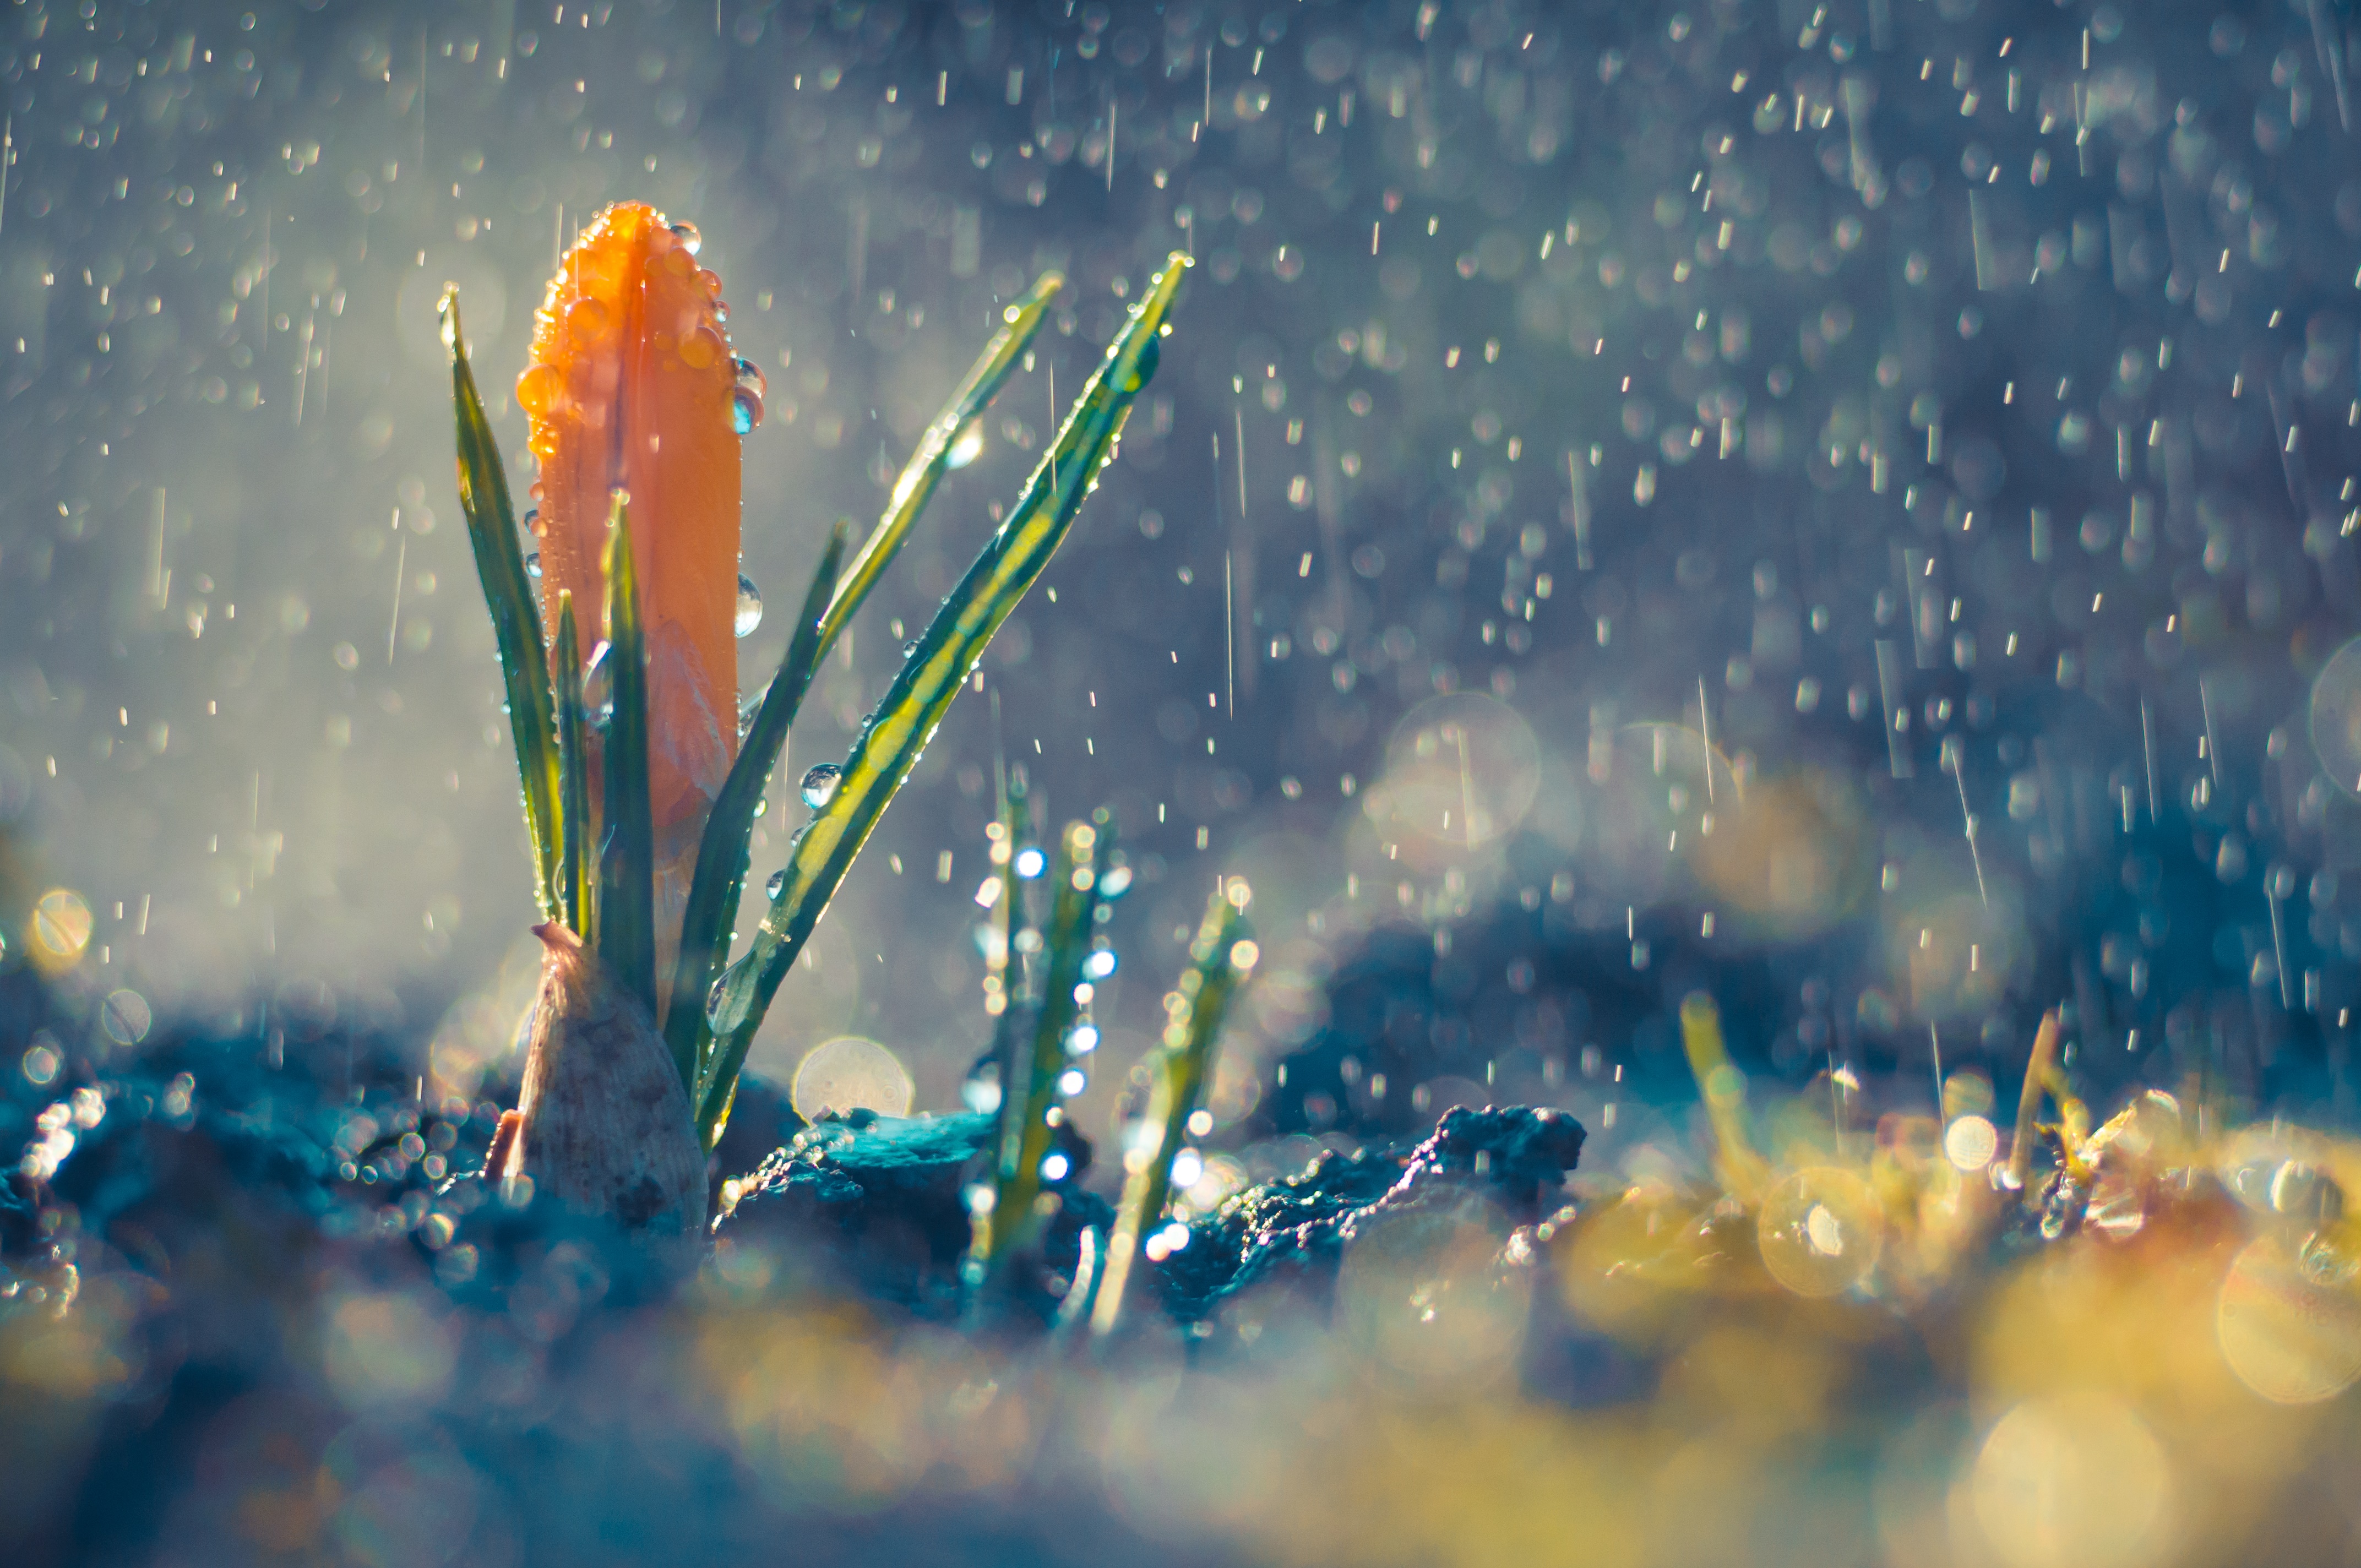 flower bud in the rain